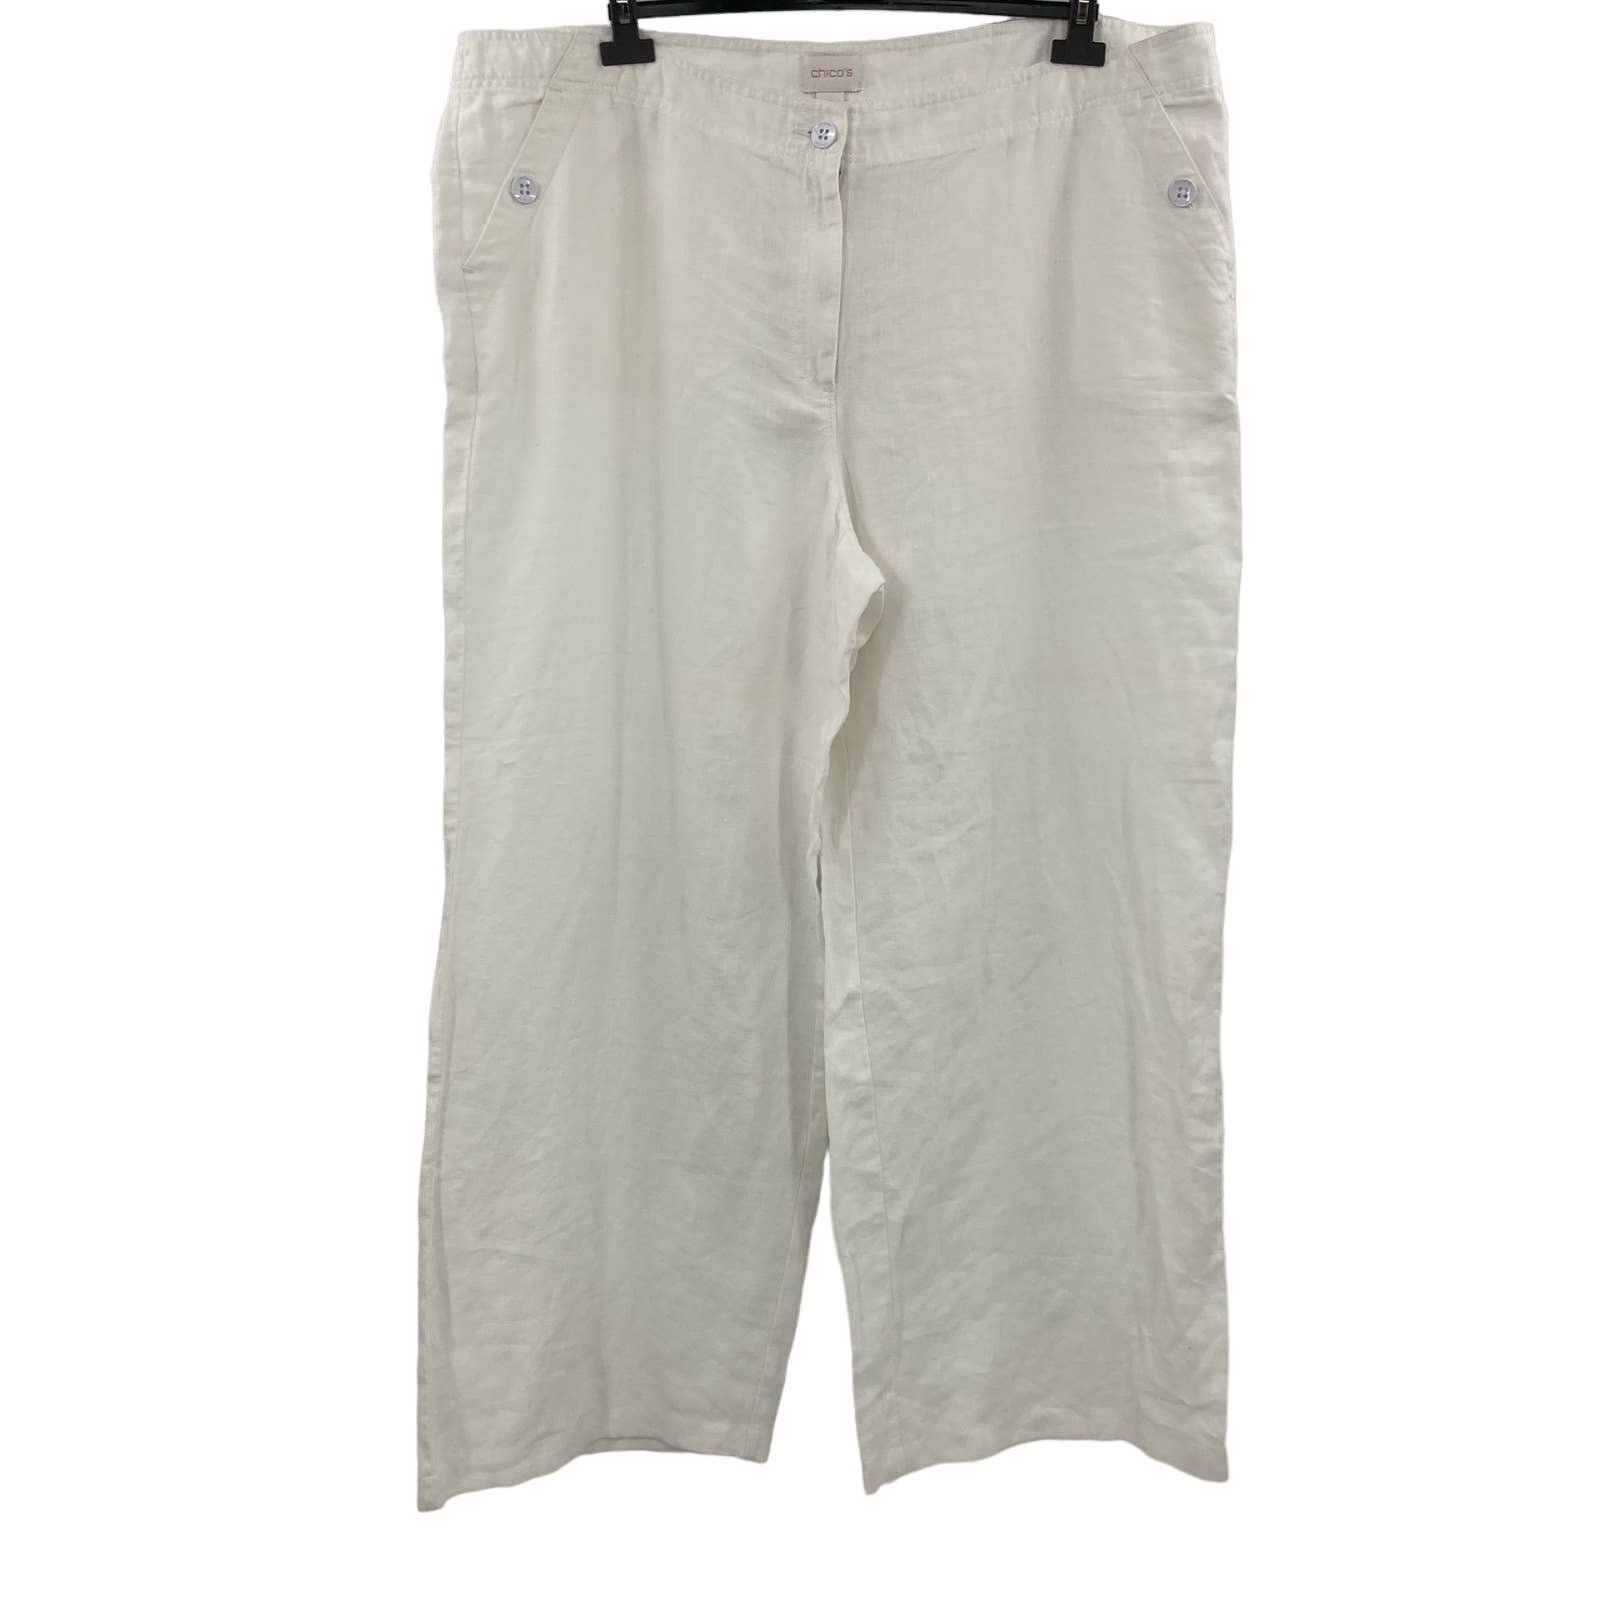 floor price Chicos Wide Leg 100% White Linen Pants Womens Size 3.5 XL 18 Sailor Beach k03Irq9gK Wholesale